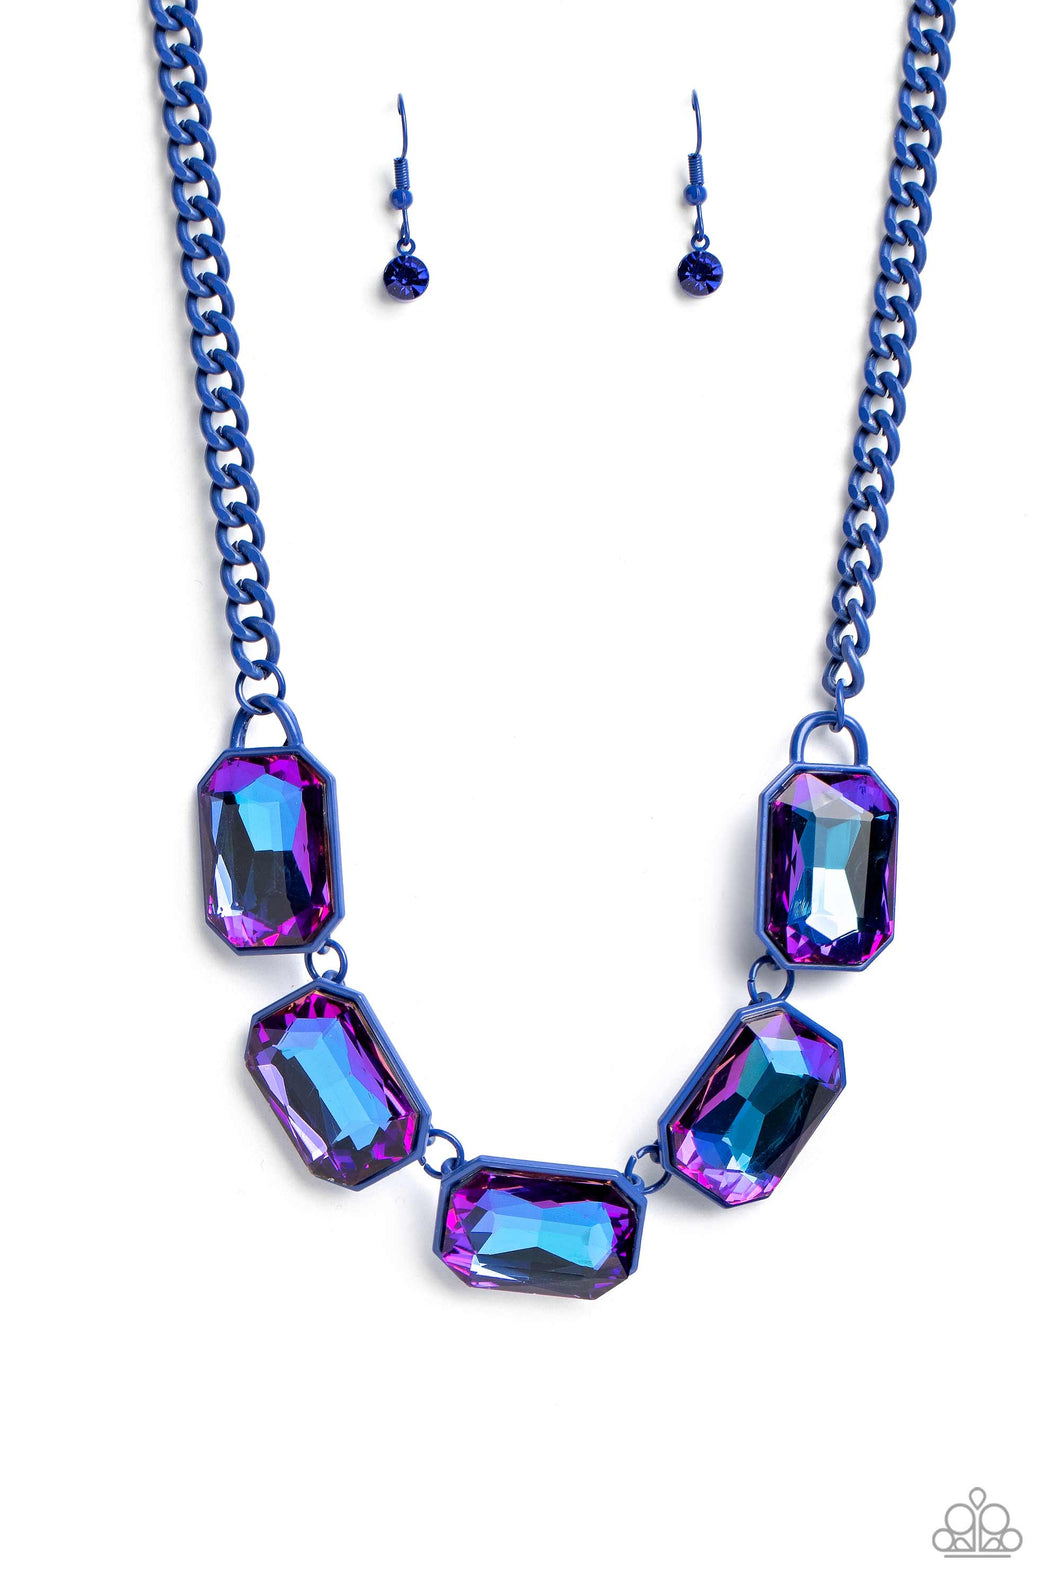 Paparazzi “Emerald City Couture” Blue Necklace Earring Set